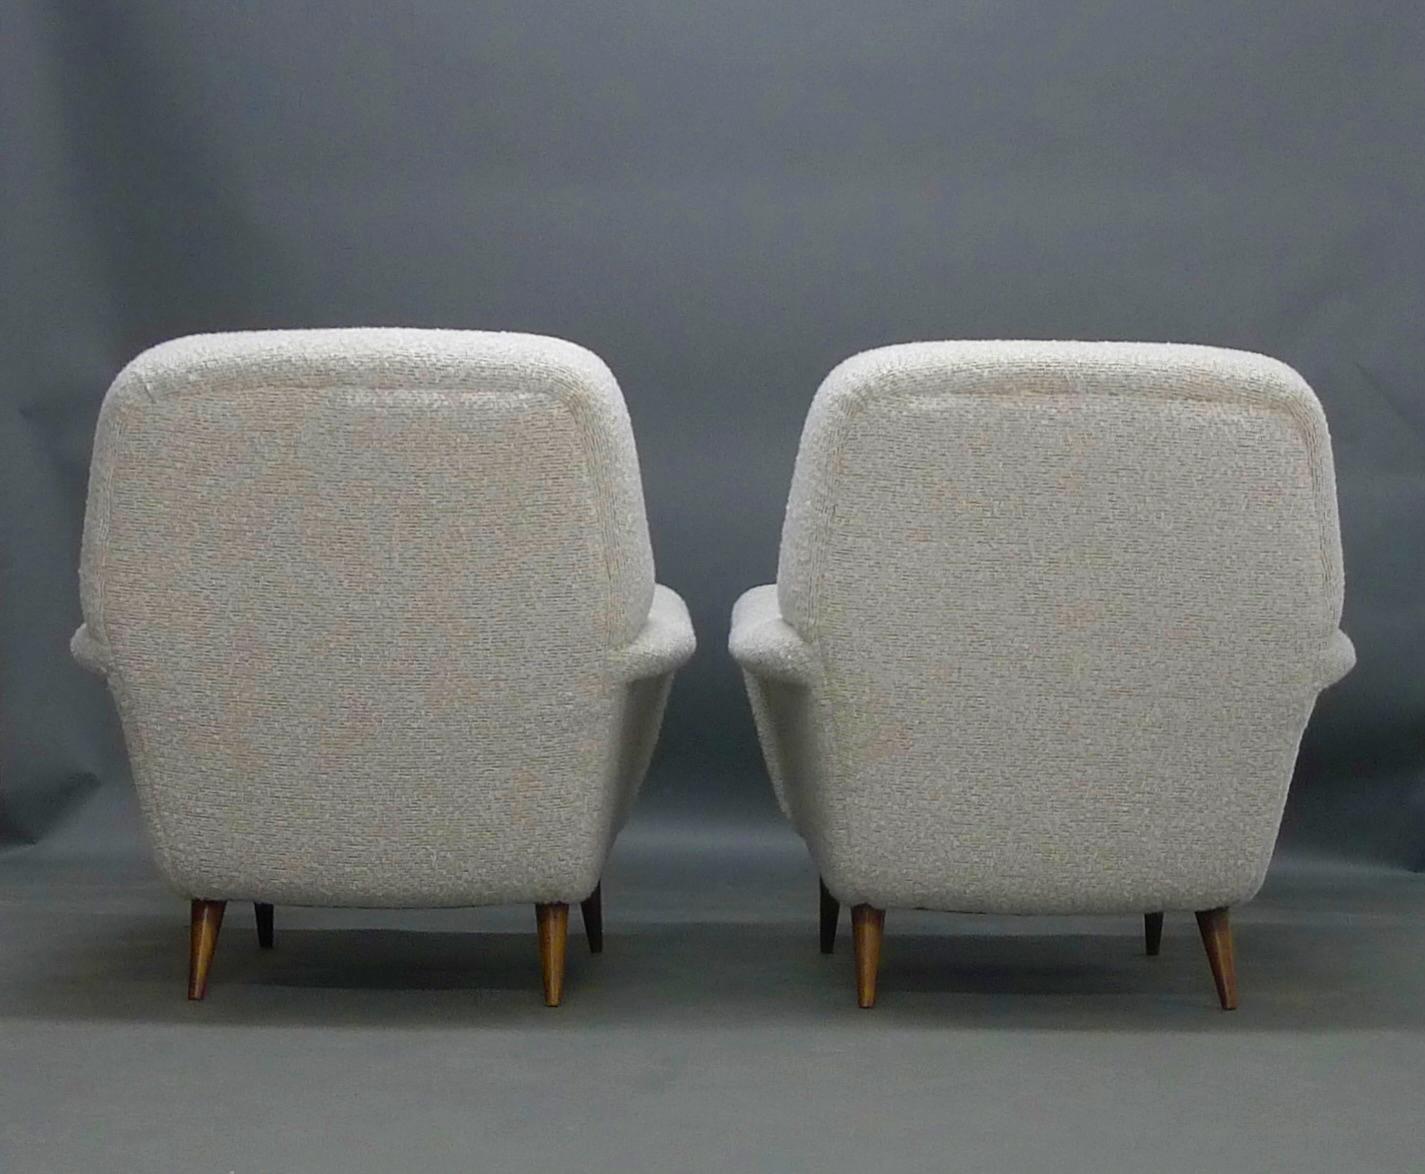 Gianfranco Frattini, Paar gepolsterte Sessel, Modell 830, von Cassina, 1950er Jahre (Italienisch) im Angebot